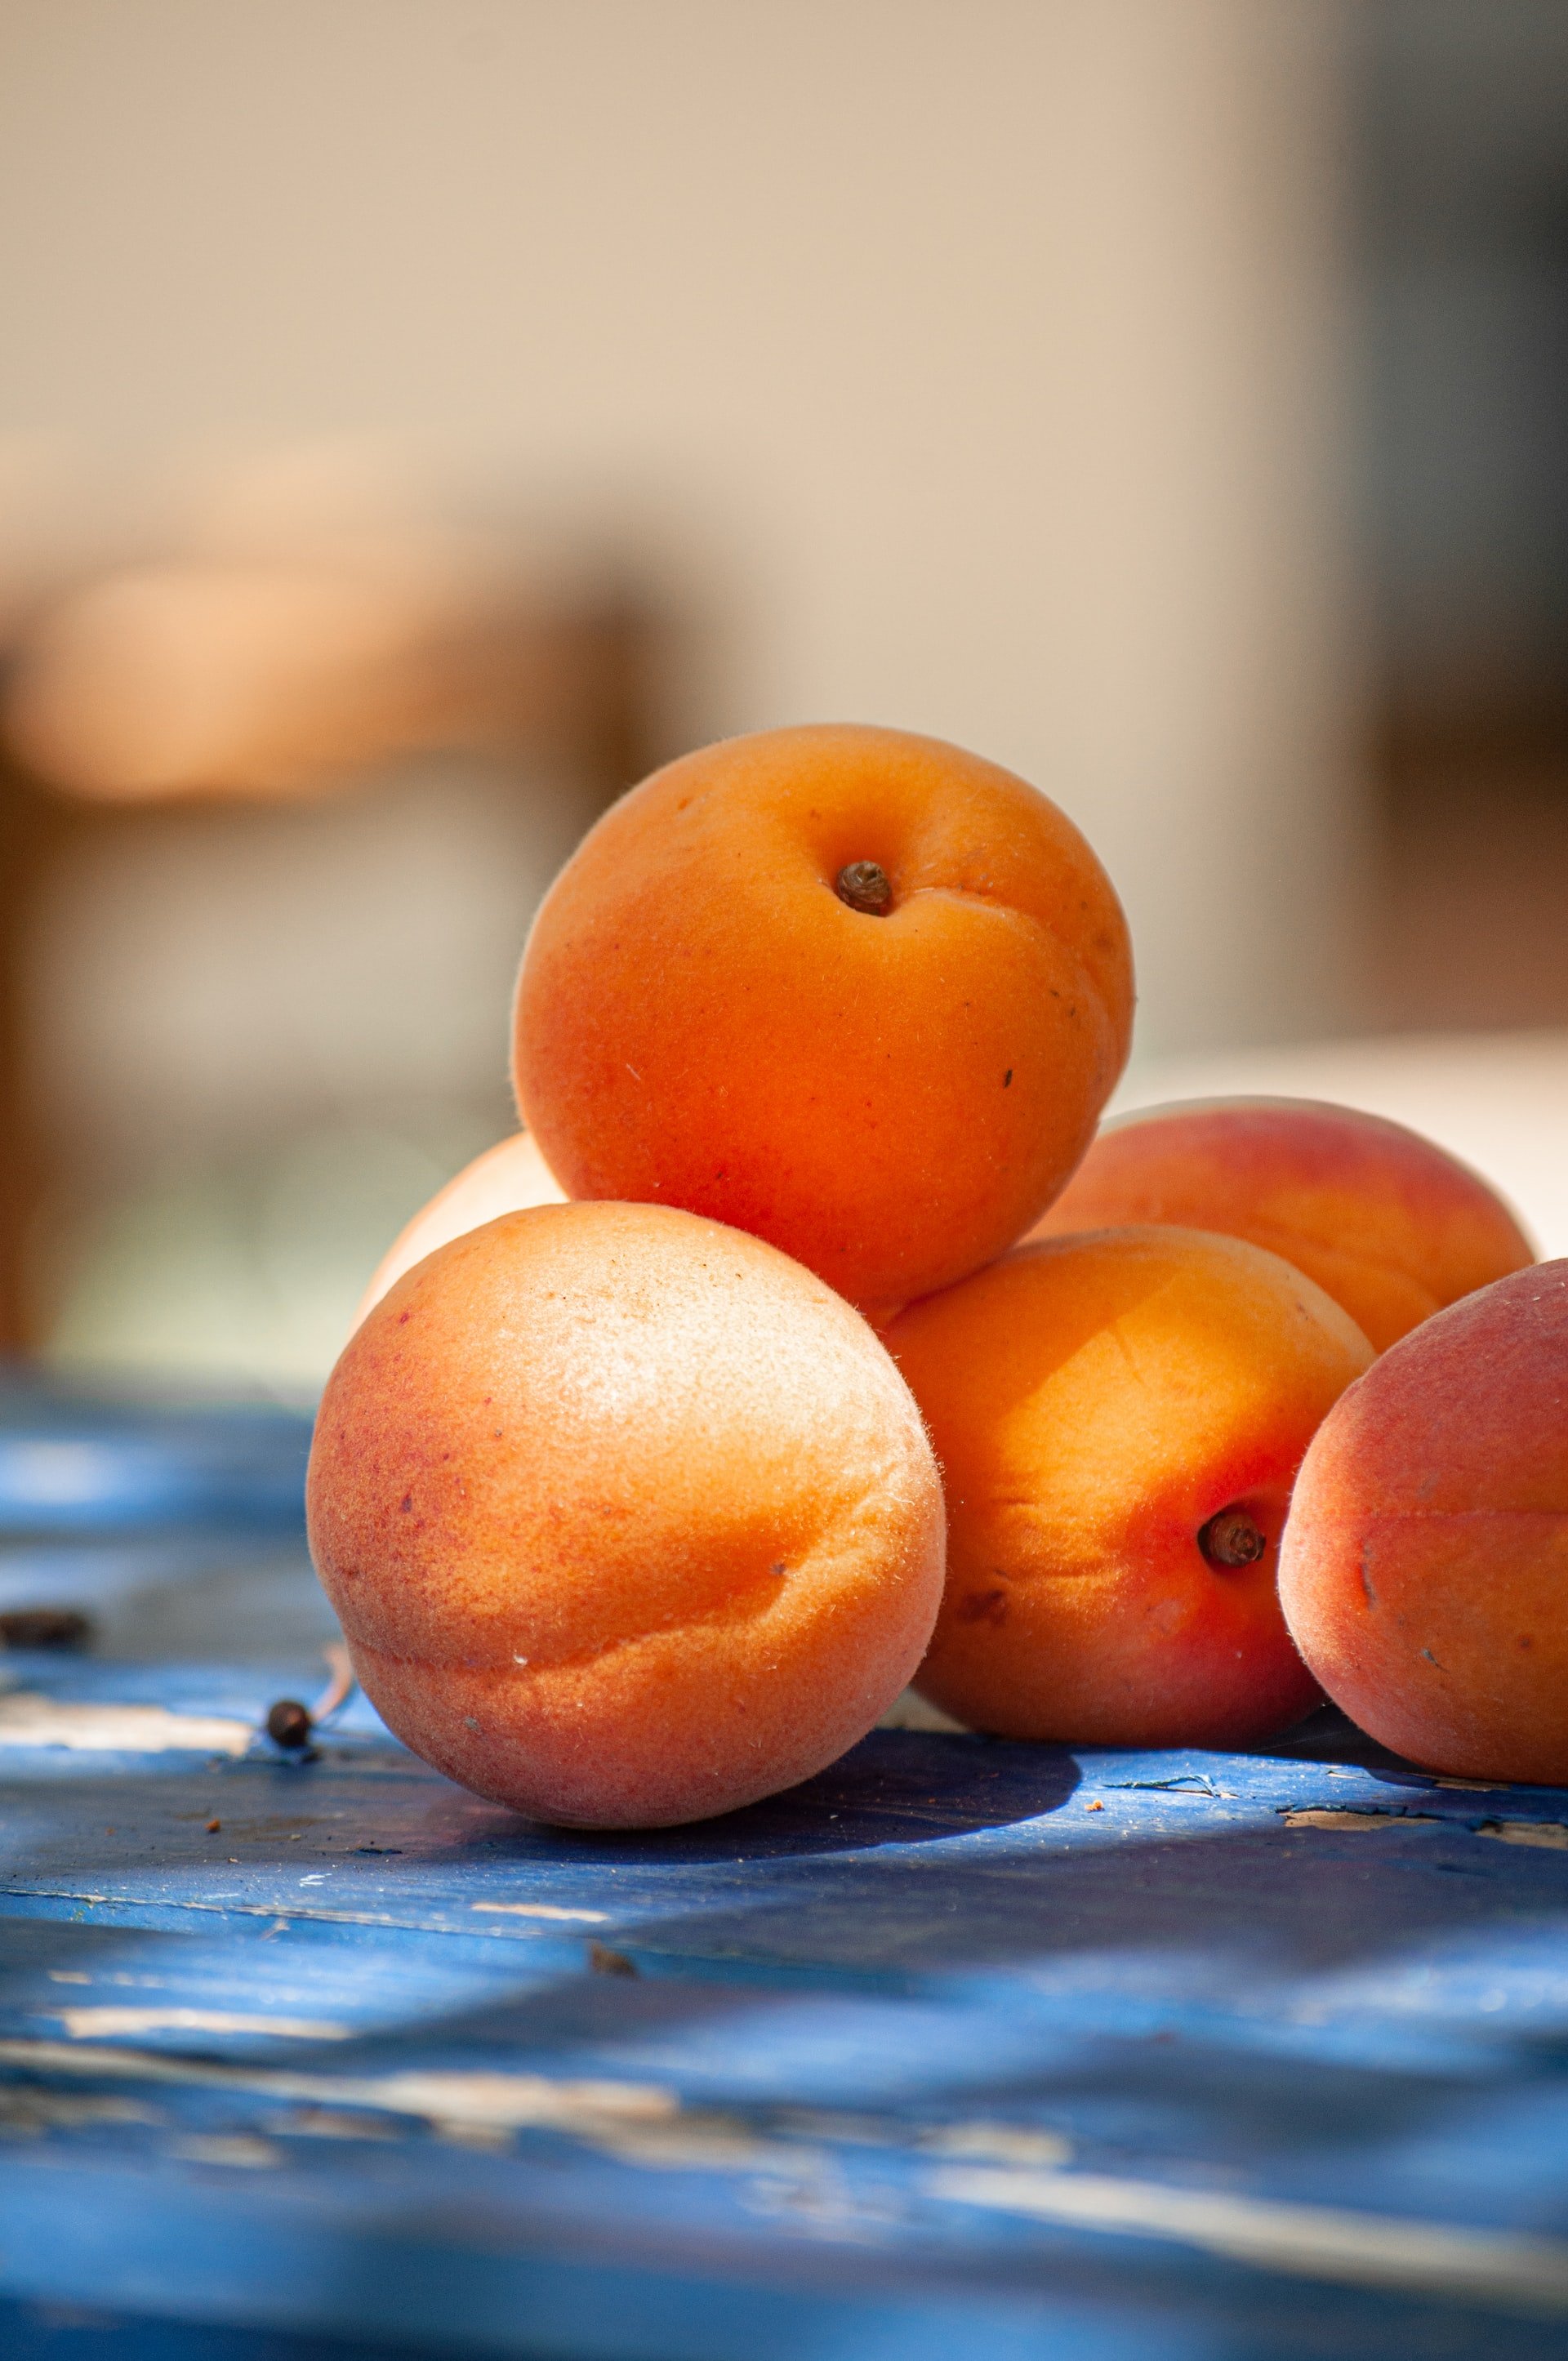 apricot sophie-louisnard-zOBJ9hnklOc-unsplash.jpeg